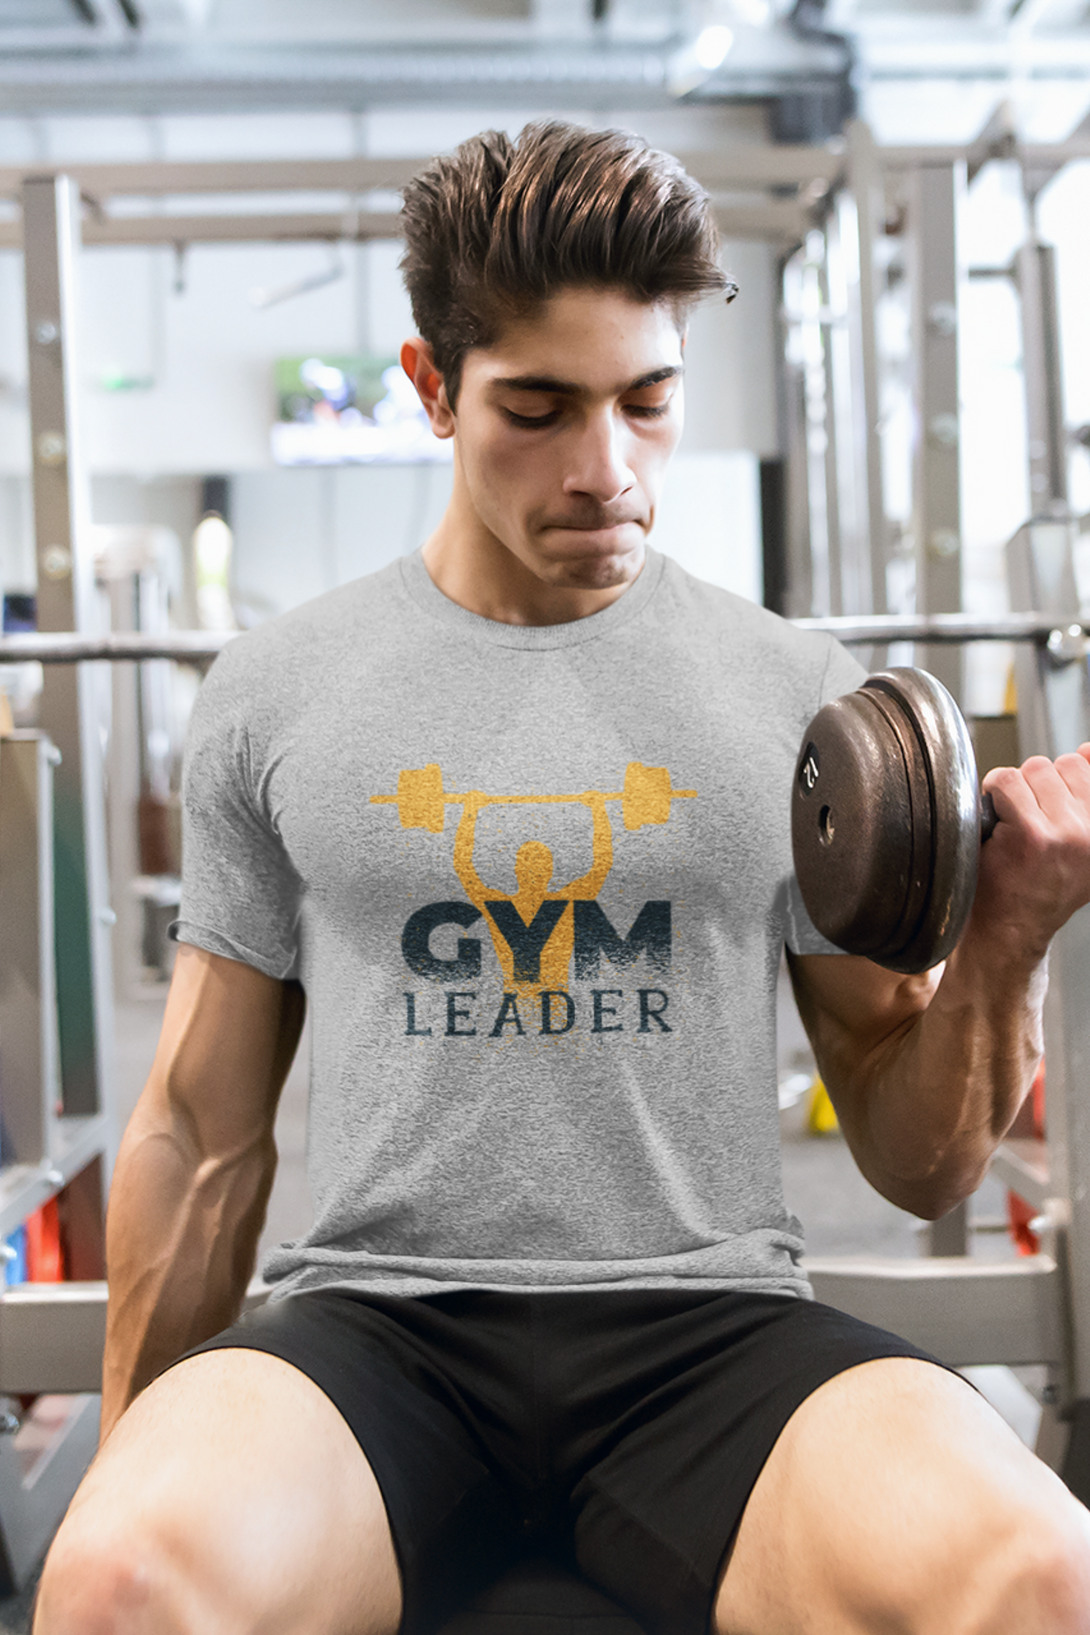 Gym Leader Printed T-Shirt For Men - WowWaves - 4